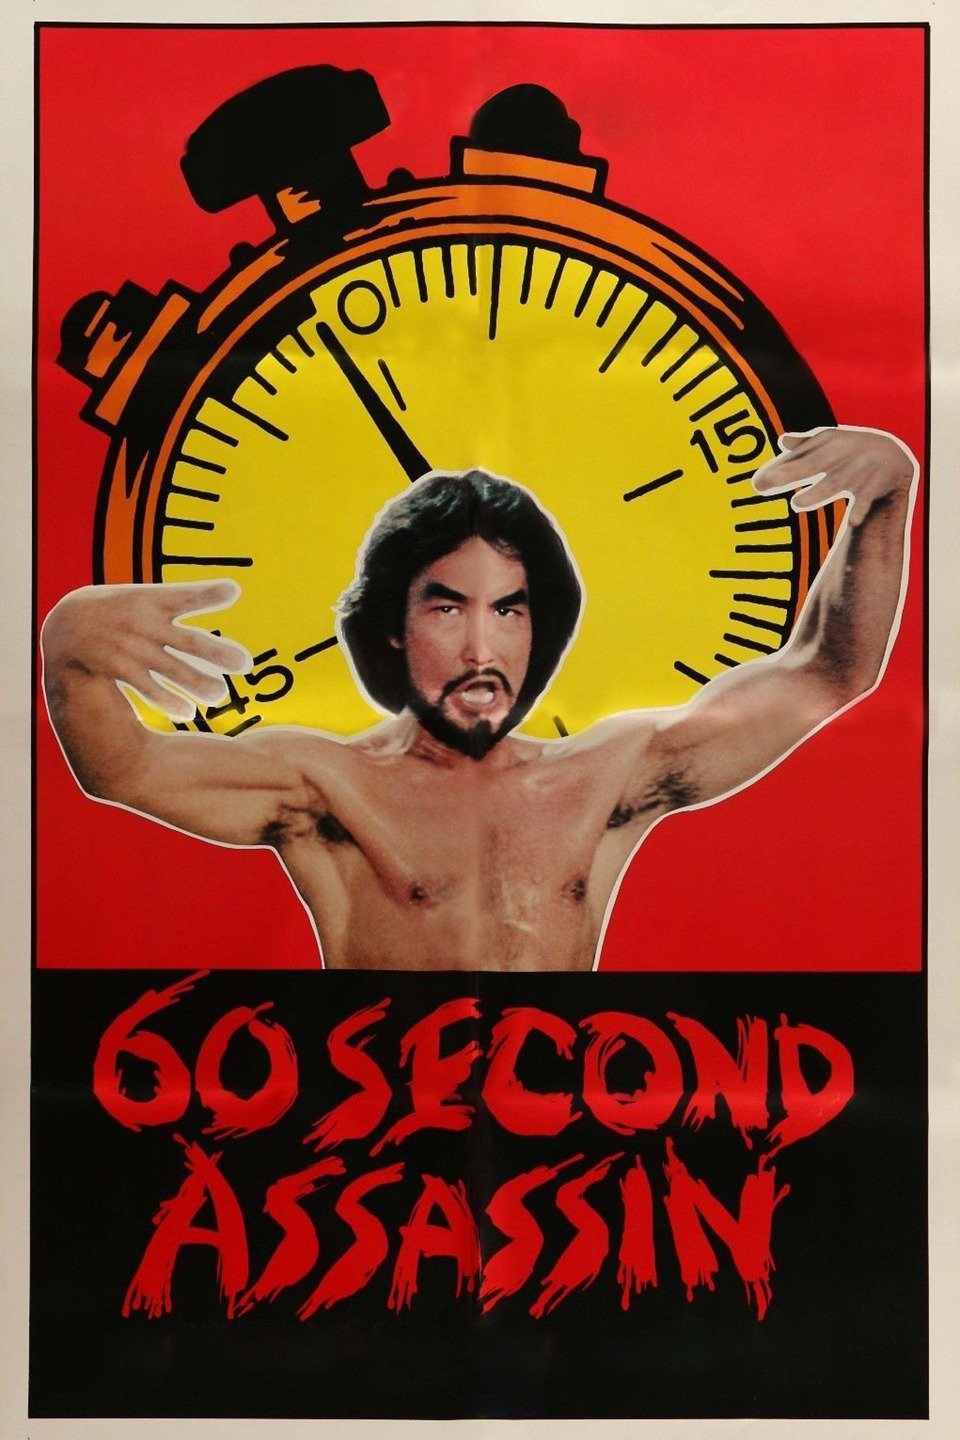 60 second assassin free movie download mac